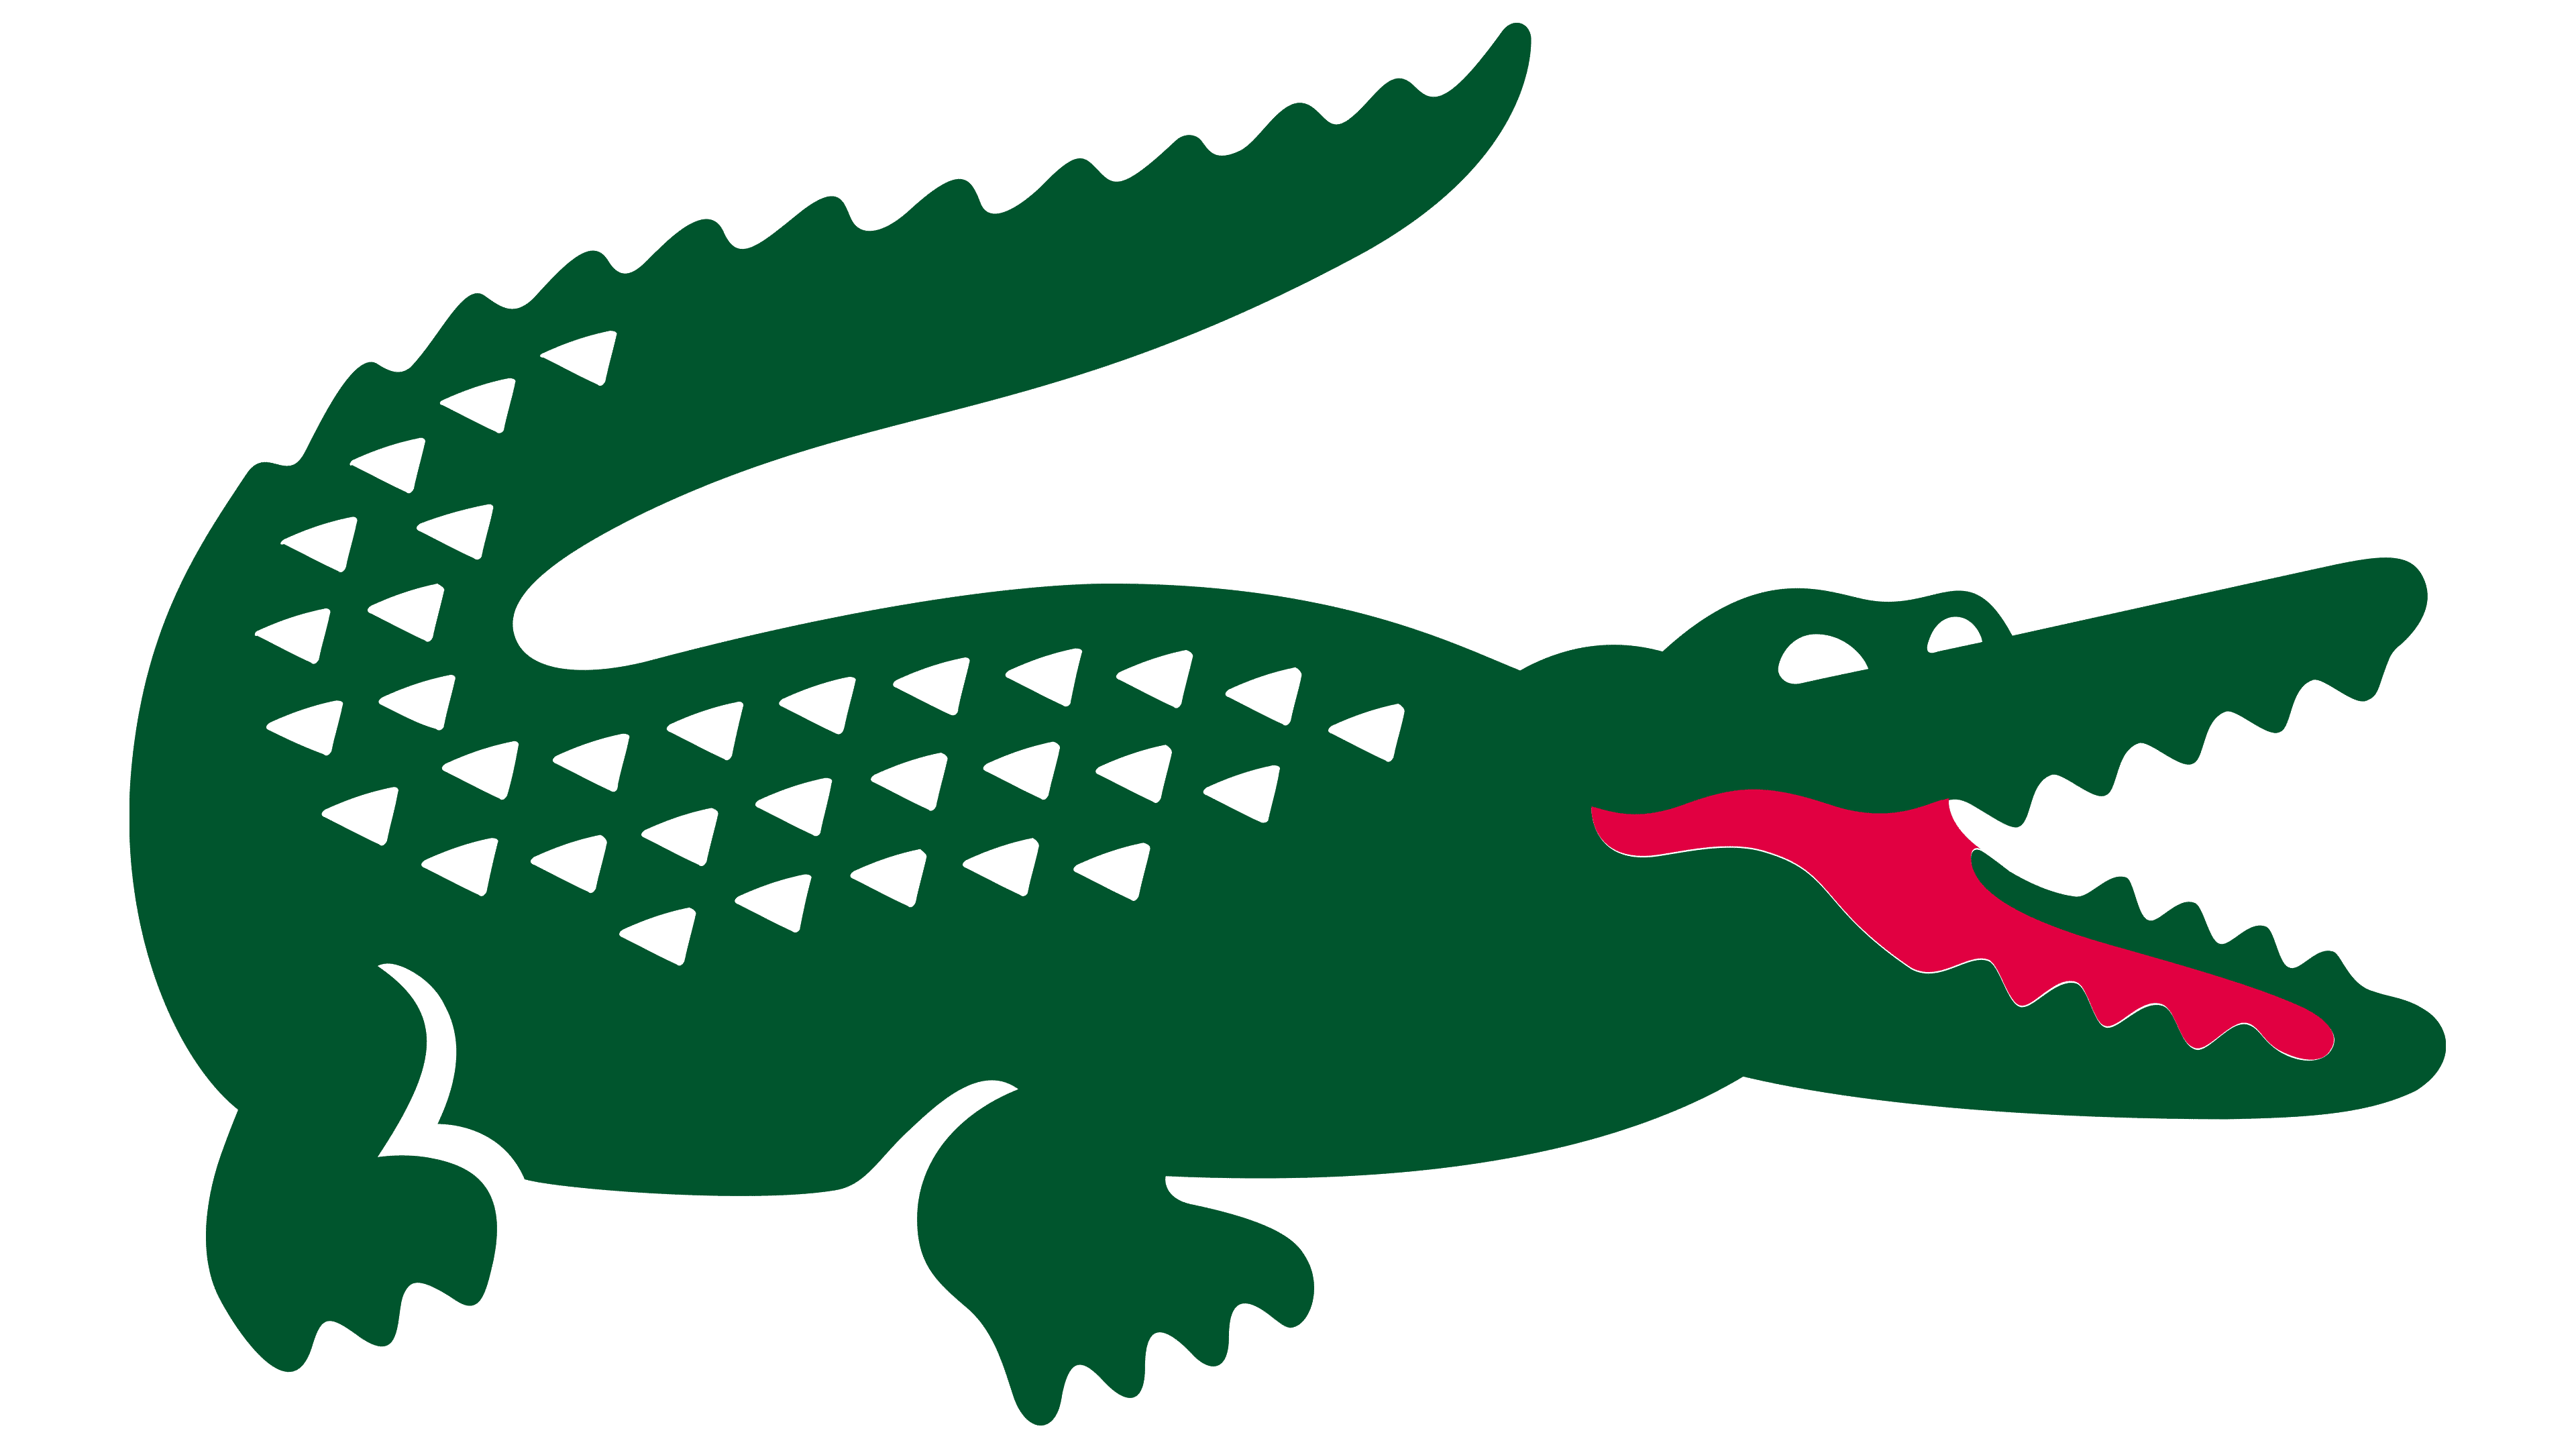 crocodile symbol brand name